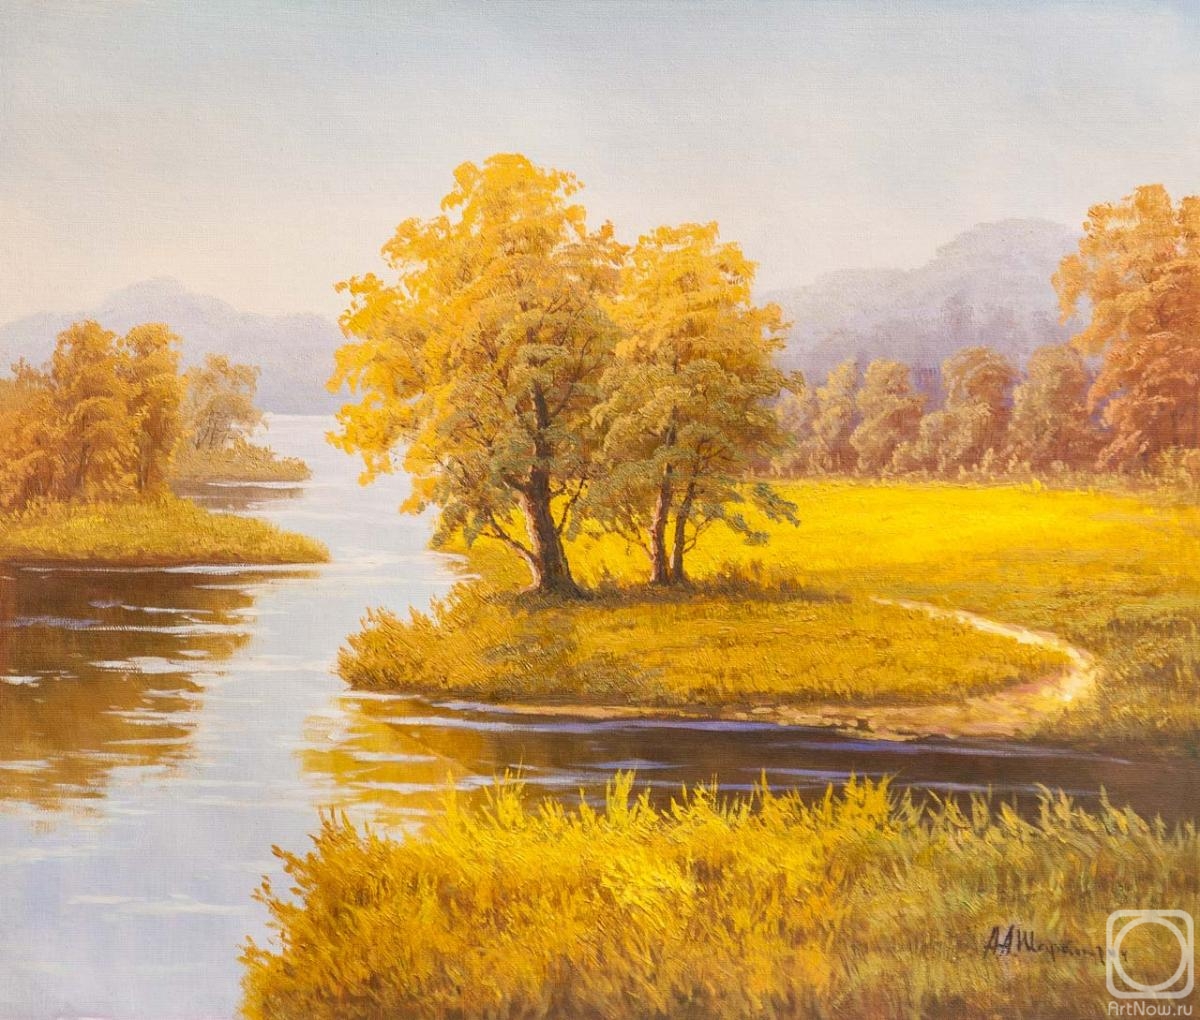 Sharabarin Andrey. Autumn pastoral. On the river bank